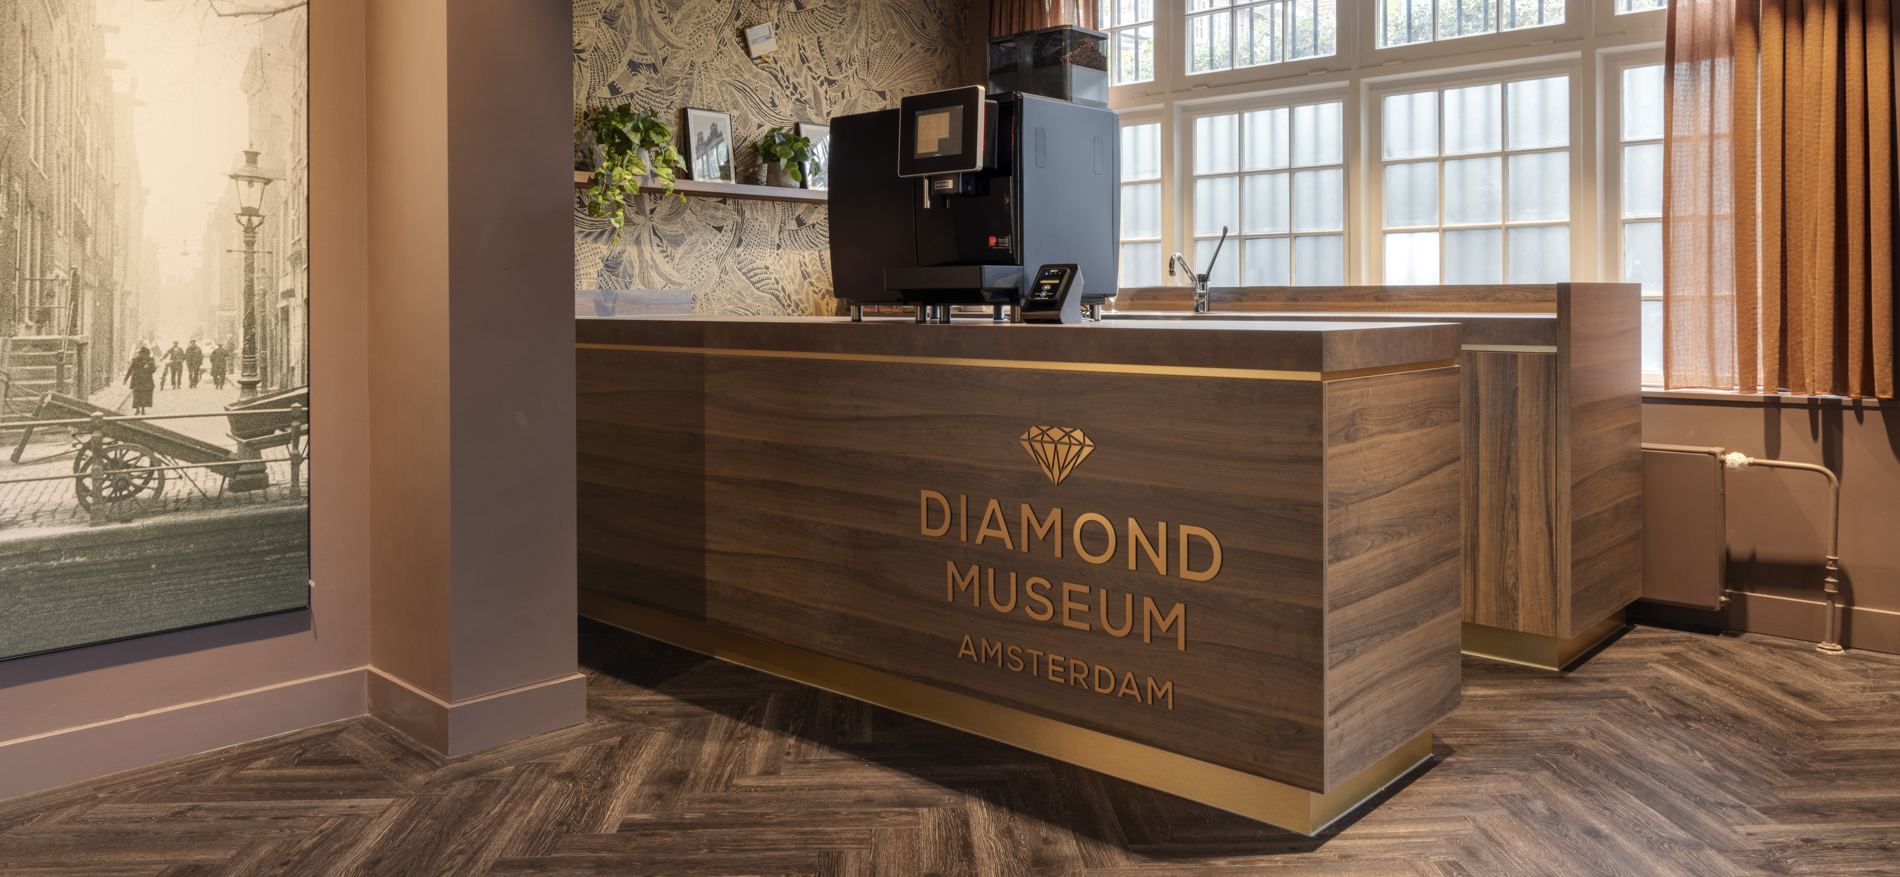 Diamond Museum | Amsterdam (NL) - Schmuck